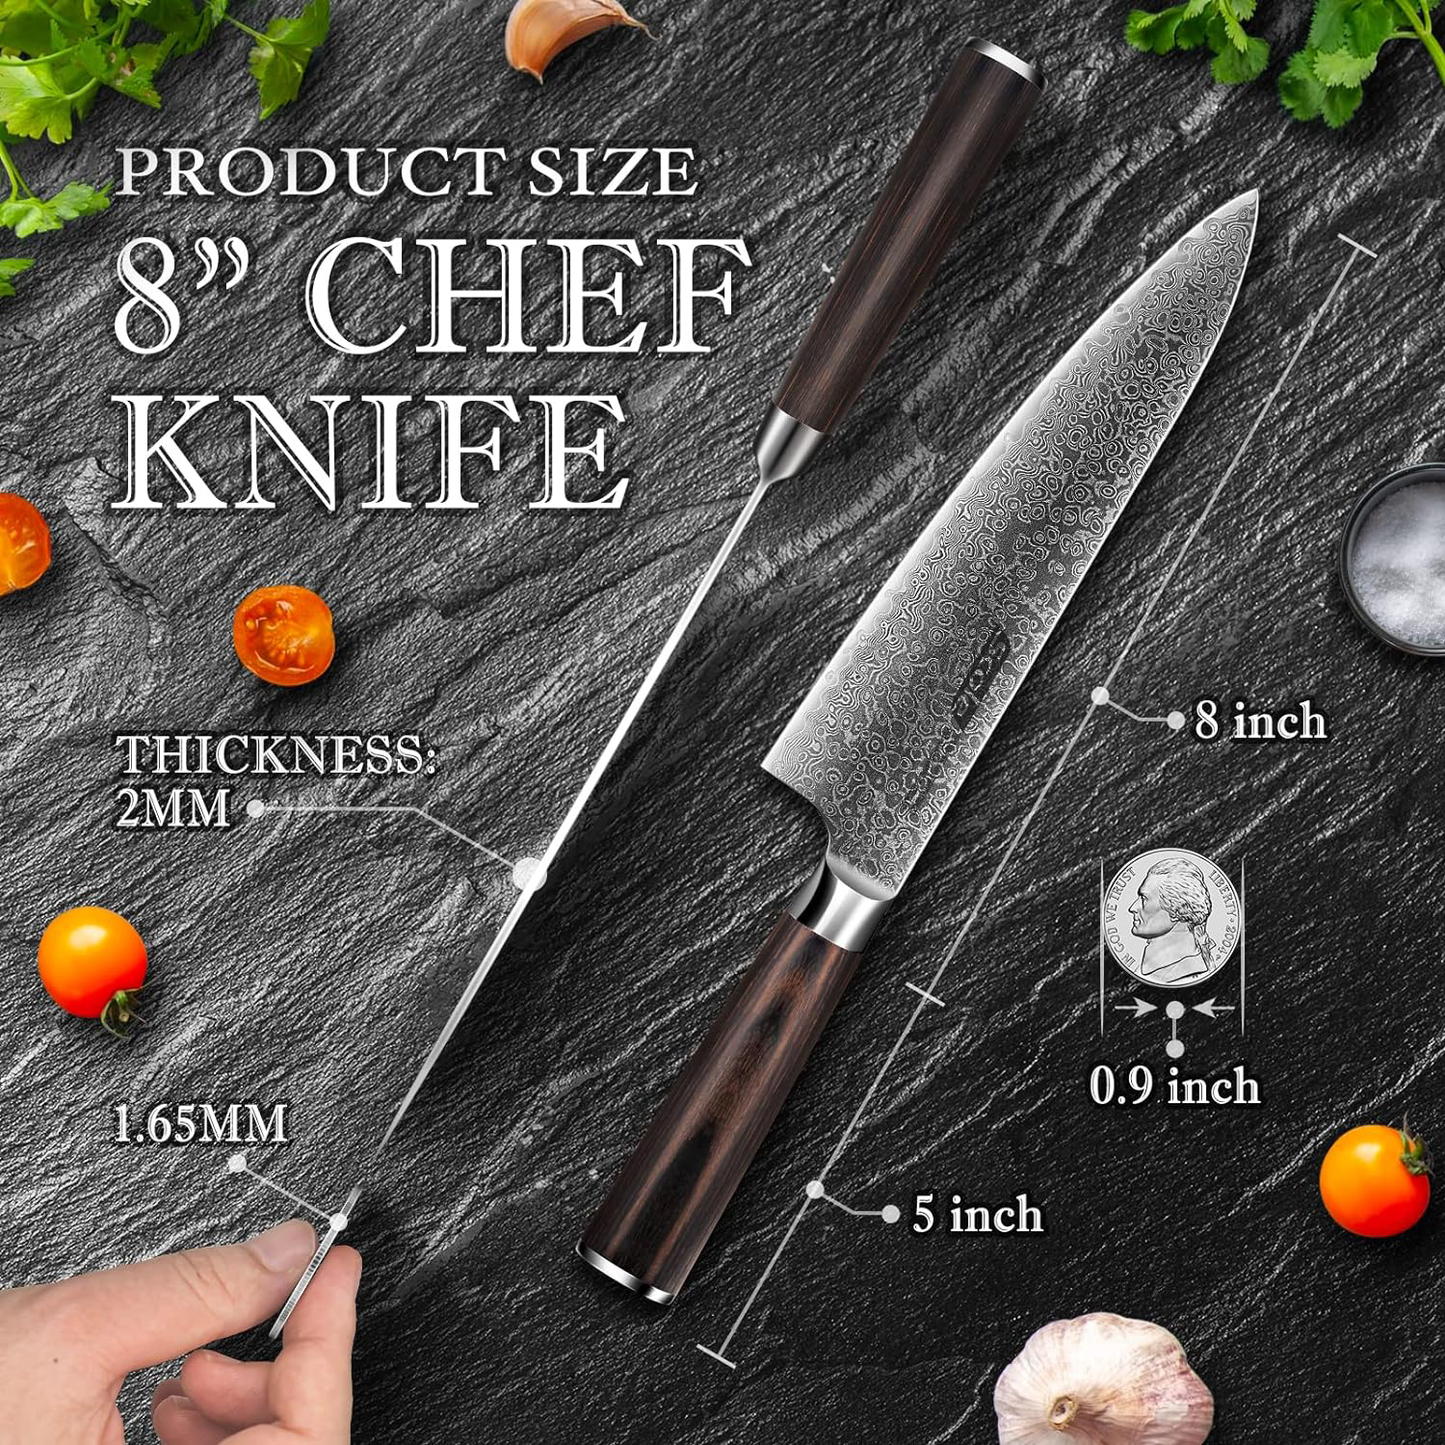 KD Japanese Kitchen Elegance: Damascus Chef Knife Gift Box